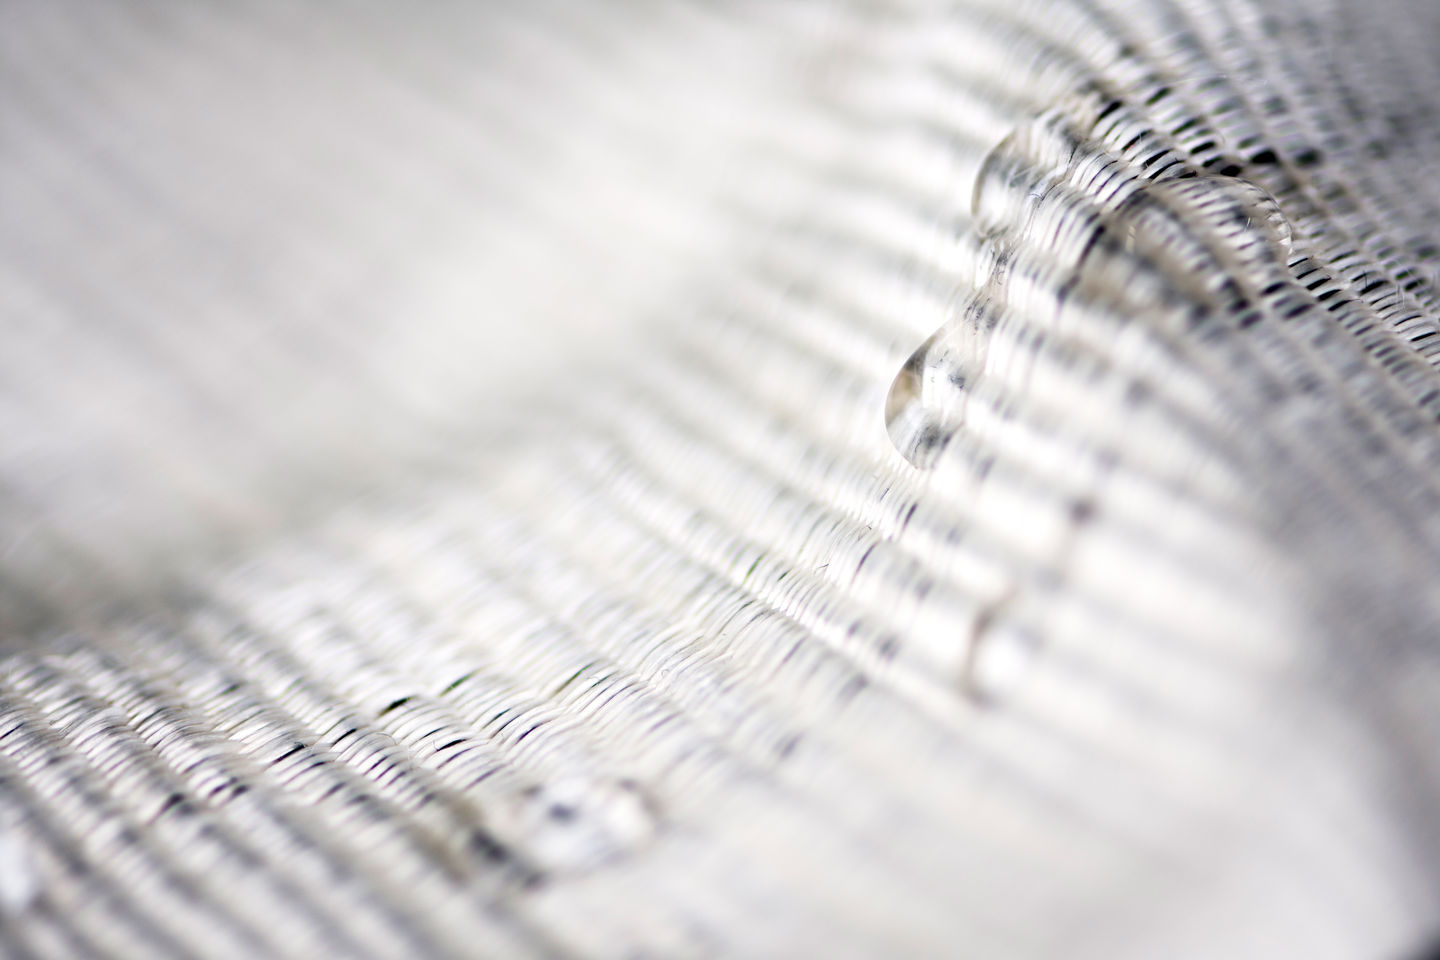 Hydrophobized textile fiber weaved sample, researcher Most Kaniz Moriam, photo Valeria Azovskaya, 2019